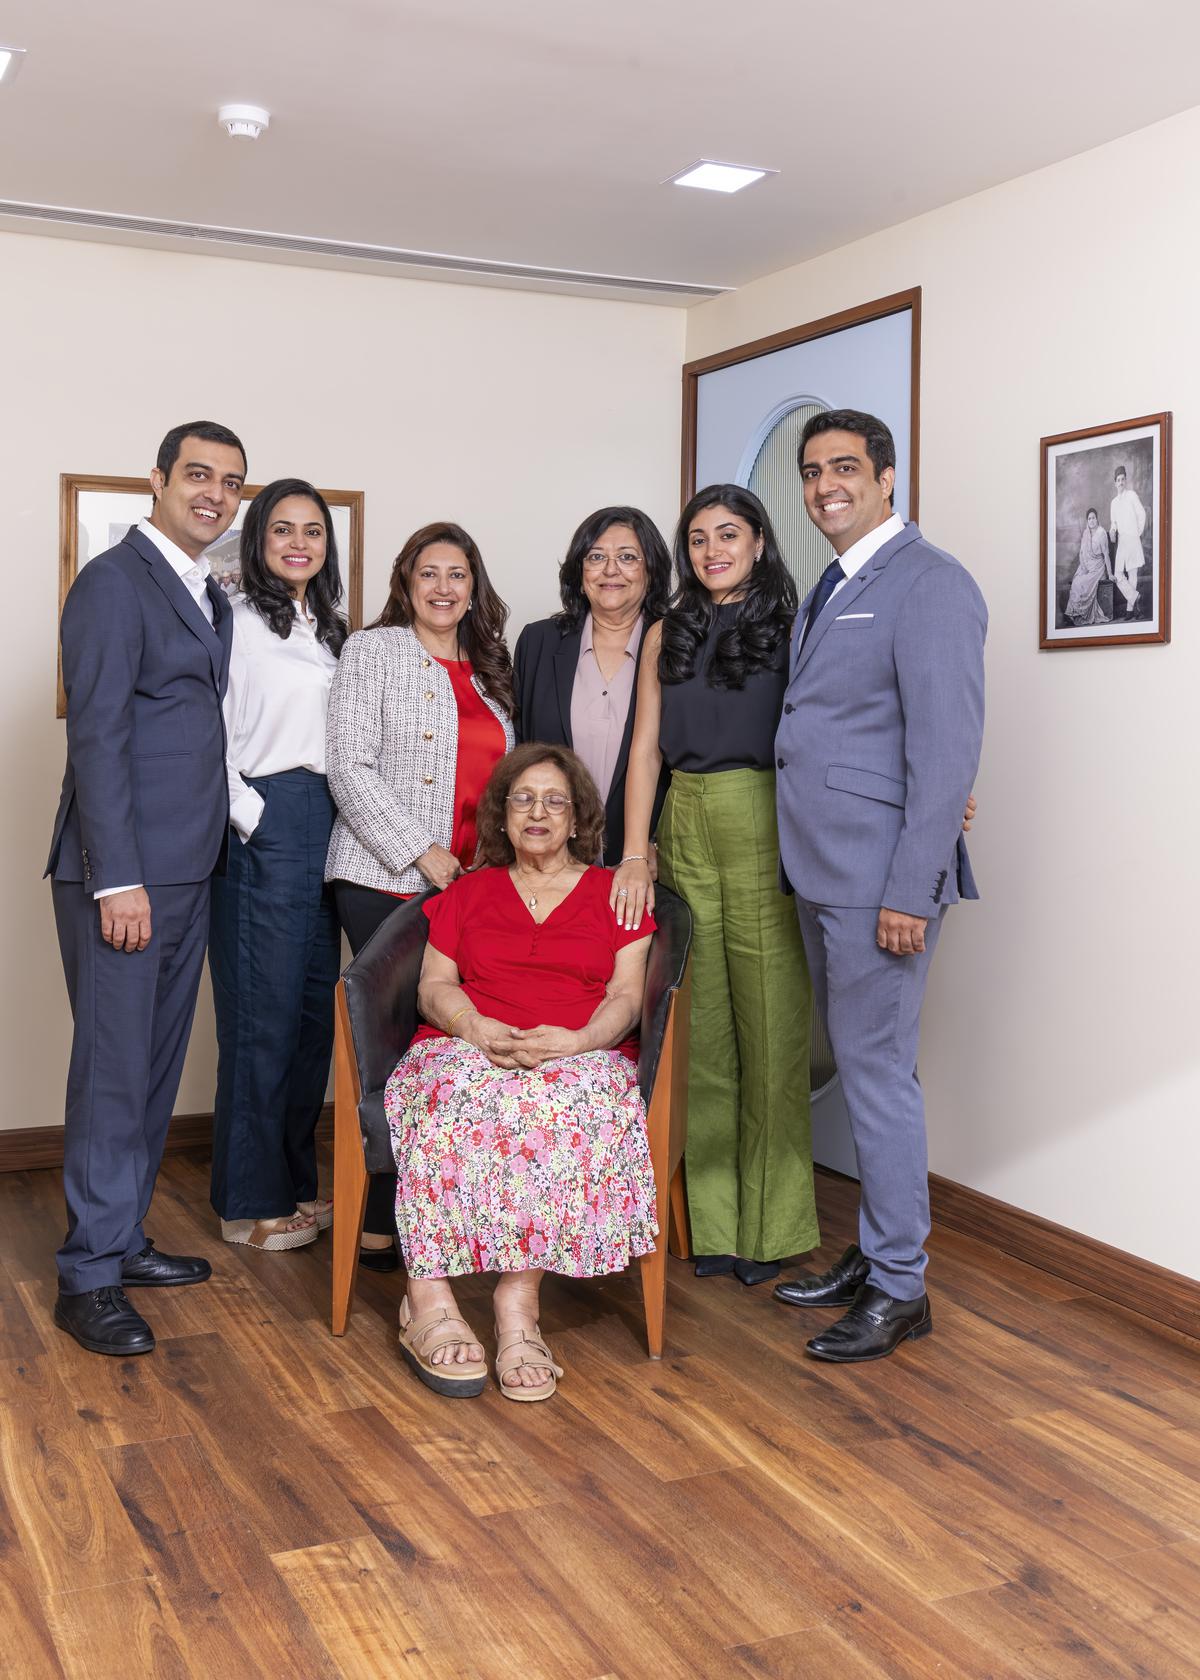 (From left to right) Bakhtyar K Irani, Parvana S Mistry, Meheru K Patel, Shernaz K Irani, Zeenia K Patel, Sarfaraz K Irani, and Jeroo Nariman 